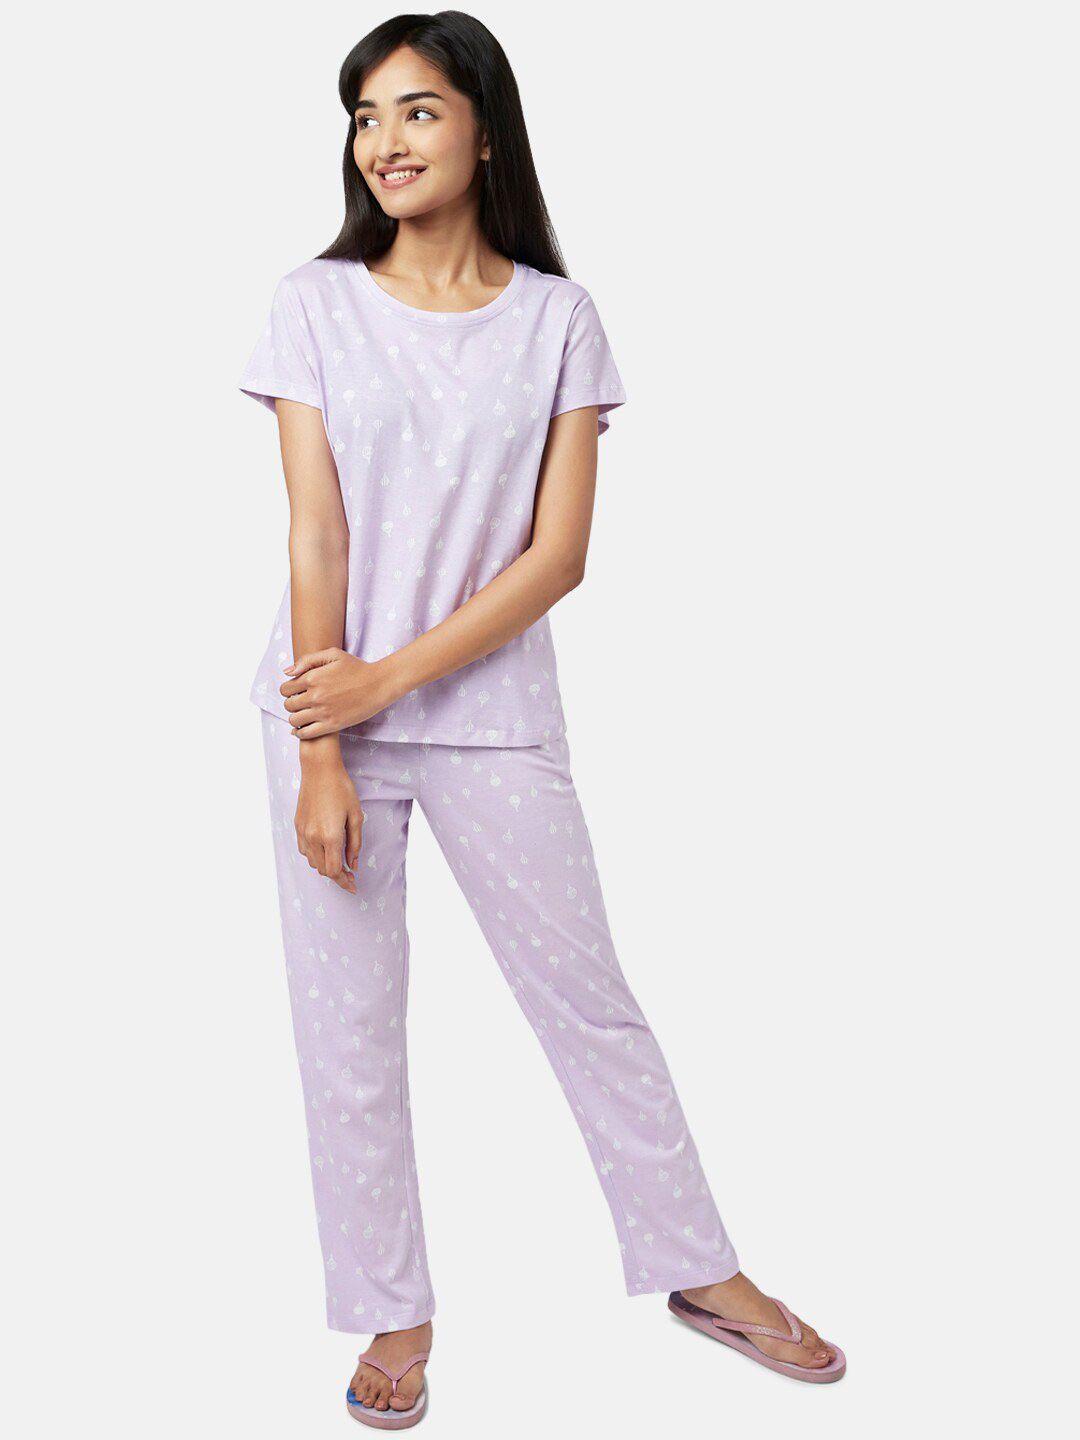 yu by pantaloons women purple & white printed night suit